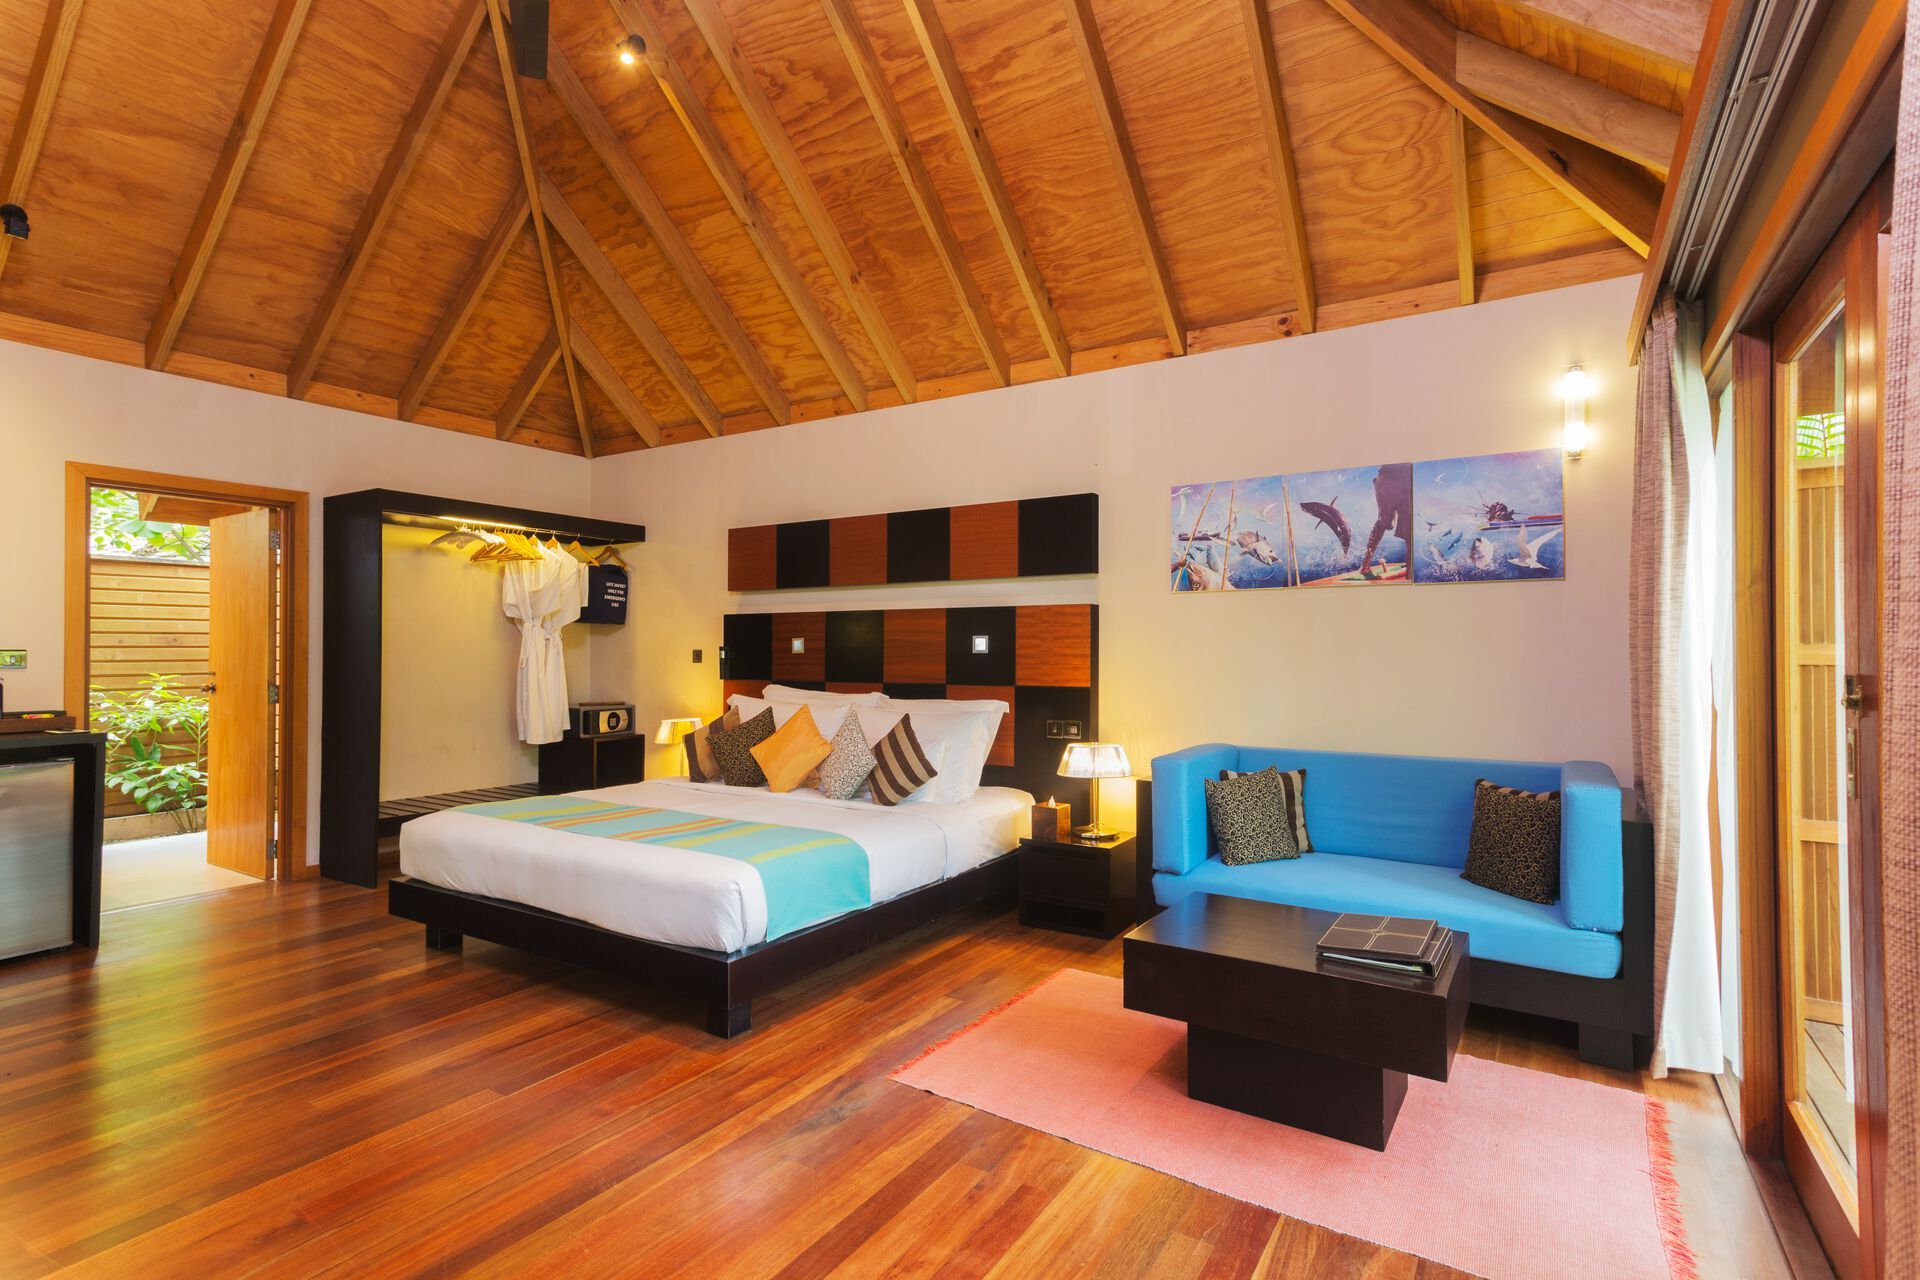 Maldives - Hotel Veligandu Island Resort & Spa 4*